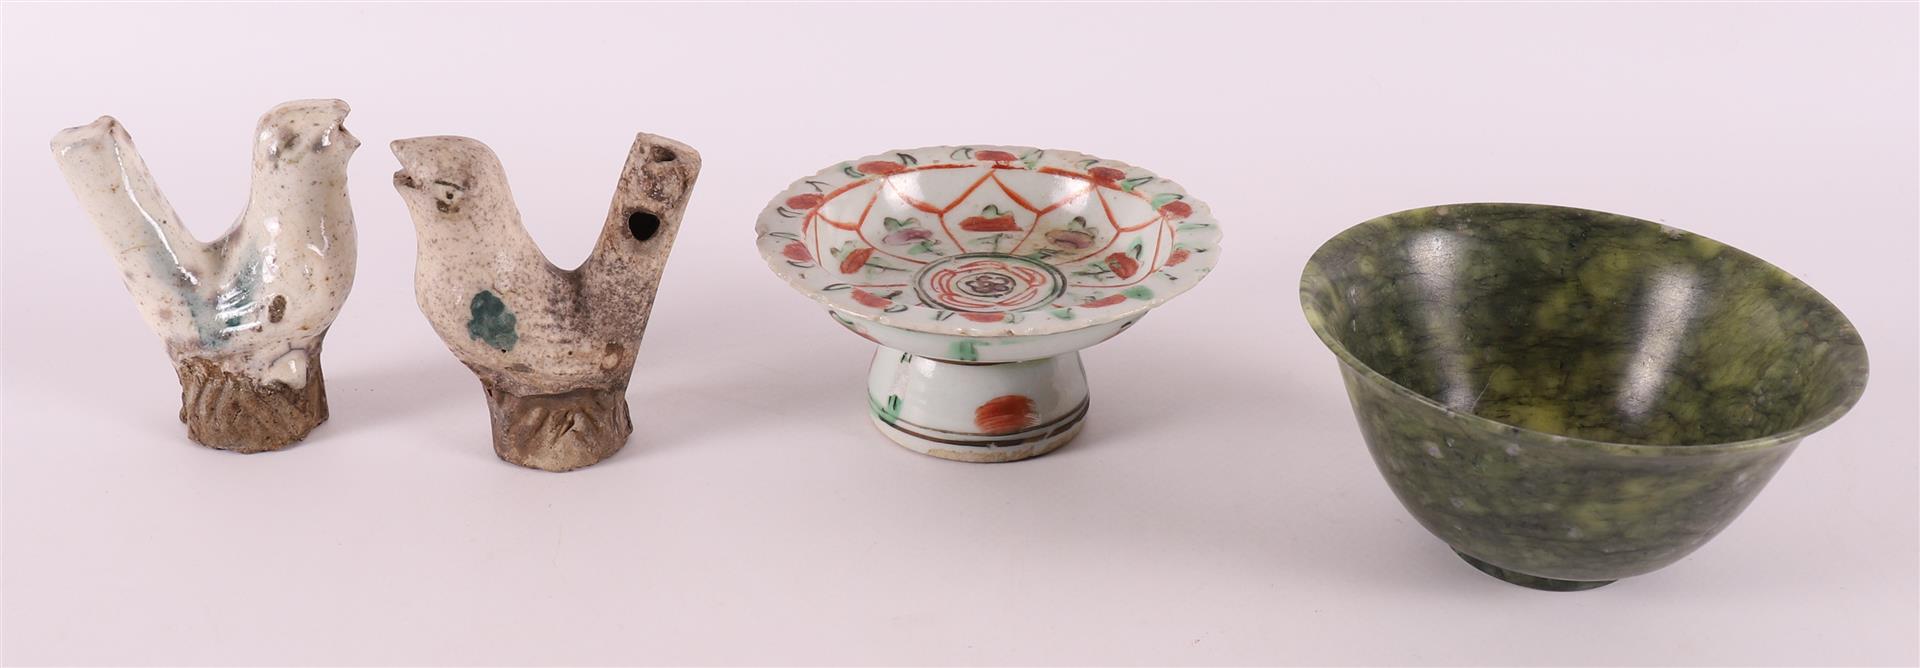 A porcelain tazza altar dish, China 18th/19th century.